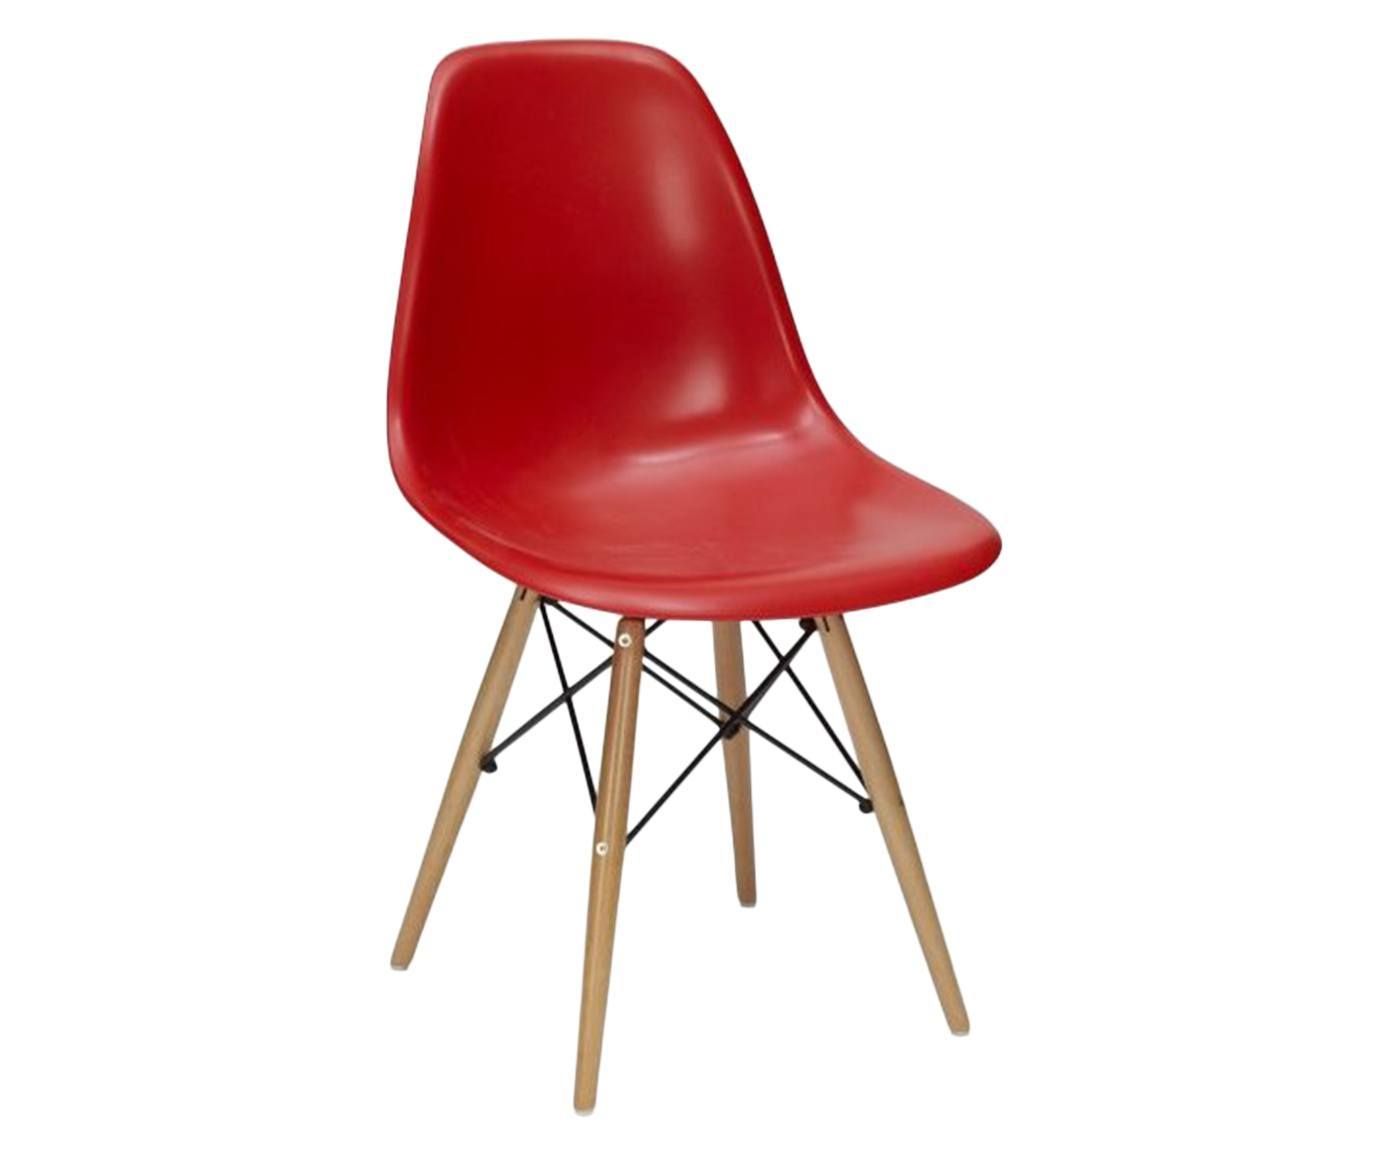 Cadeira paris wood - rama | Westwing.com.br